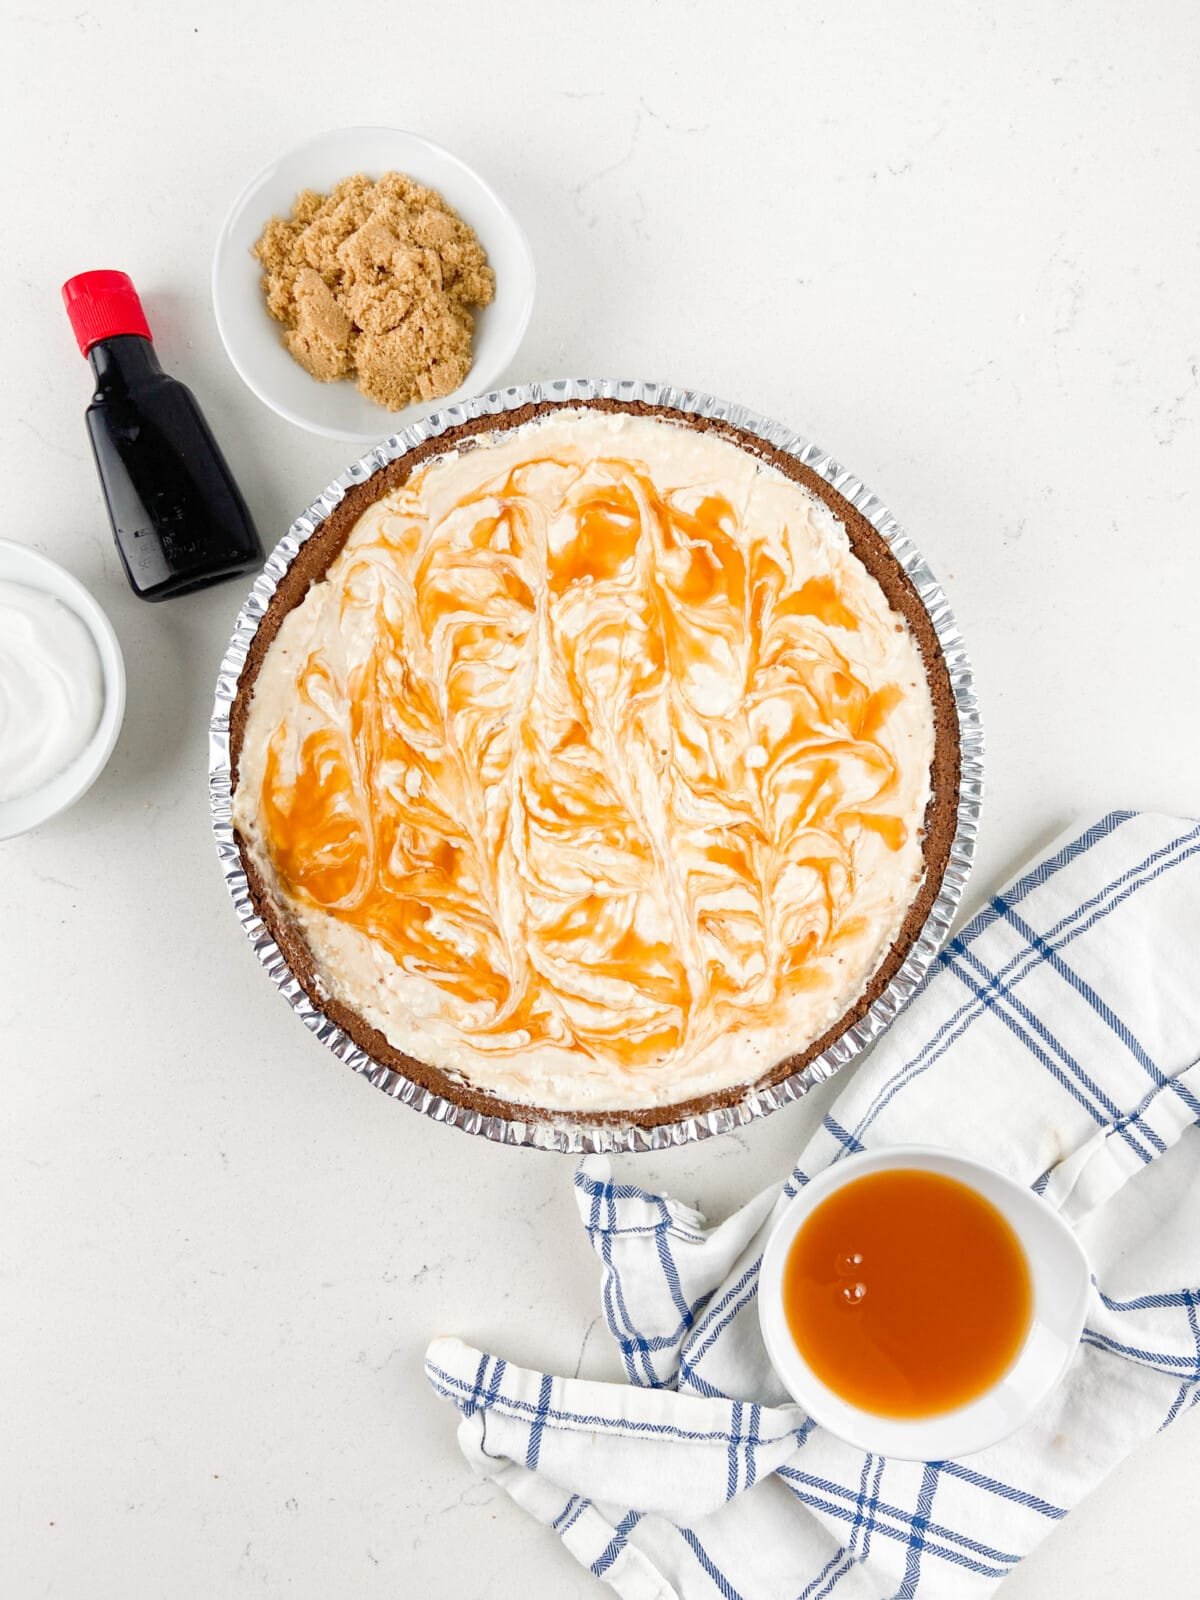 pie with caramel swirled on top.